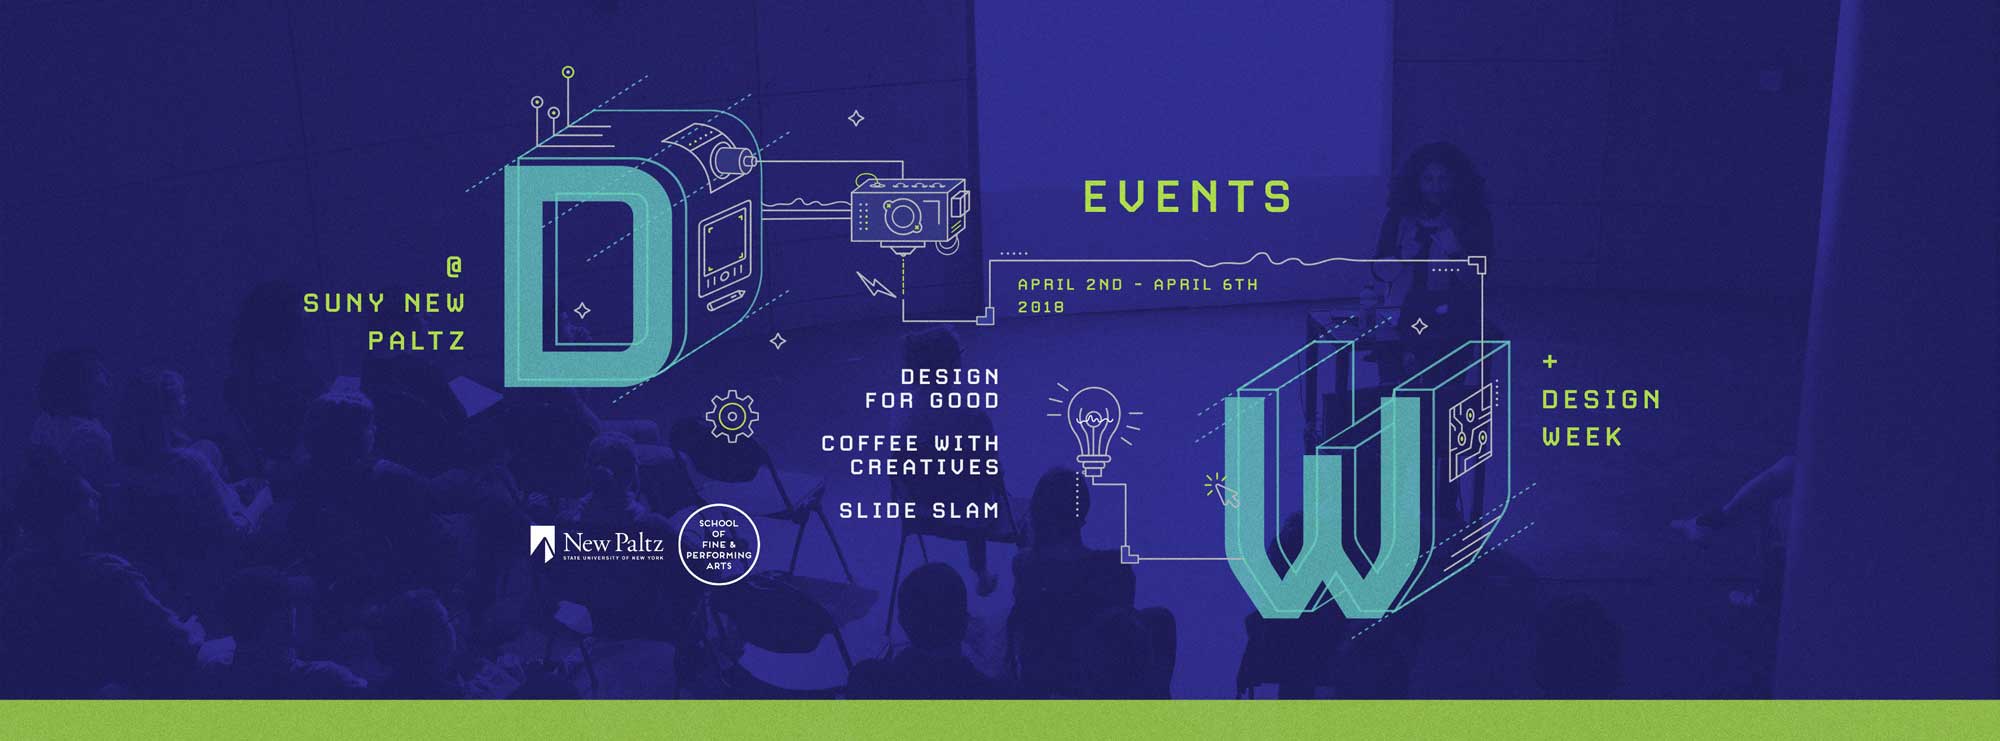 illustrated banner promoting events for Design Week 2018